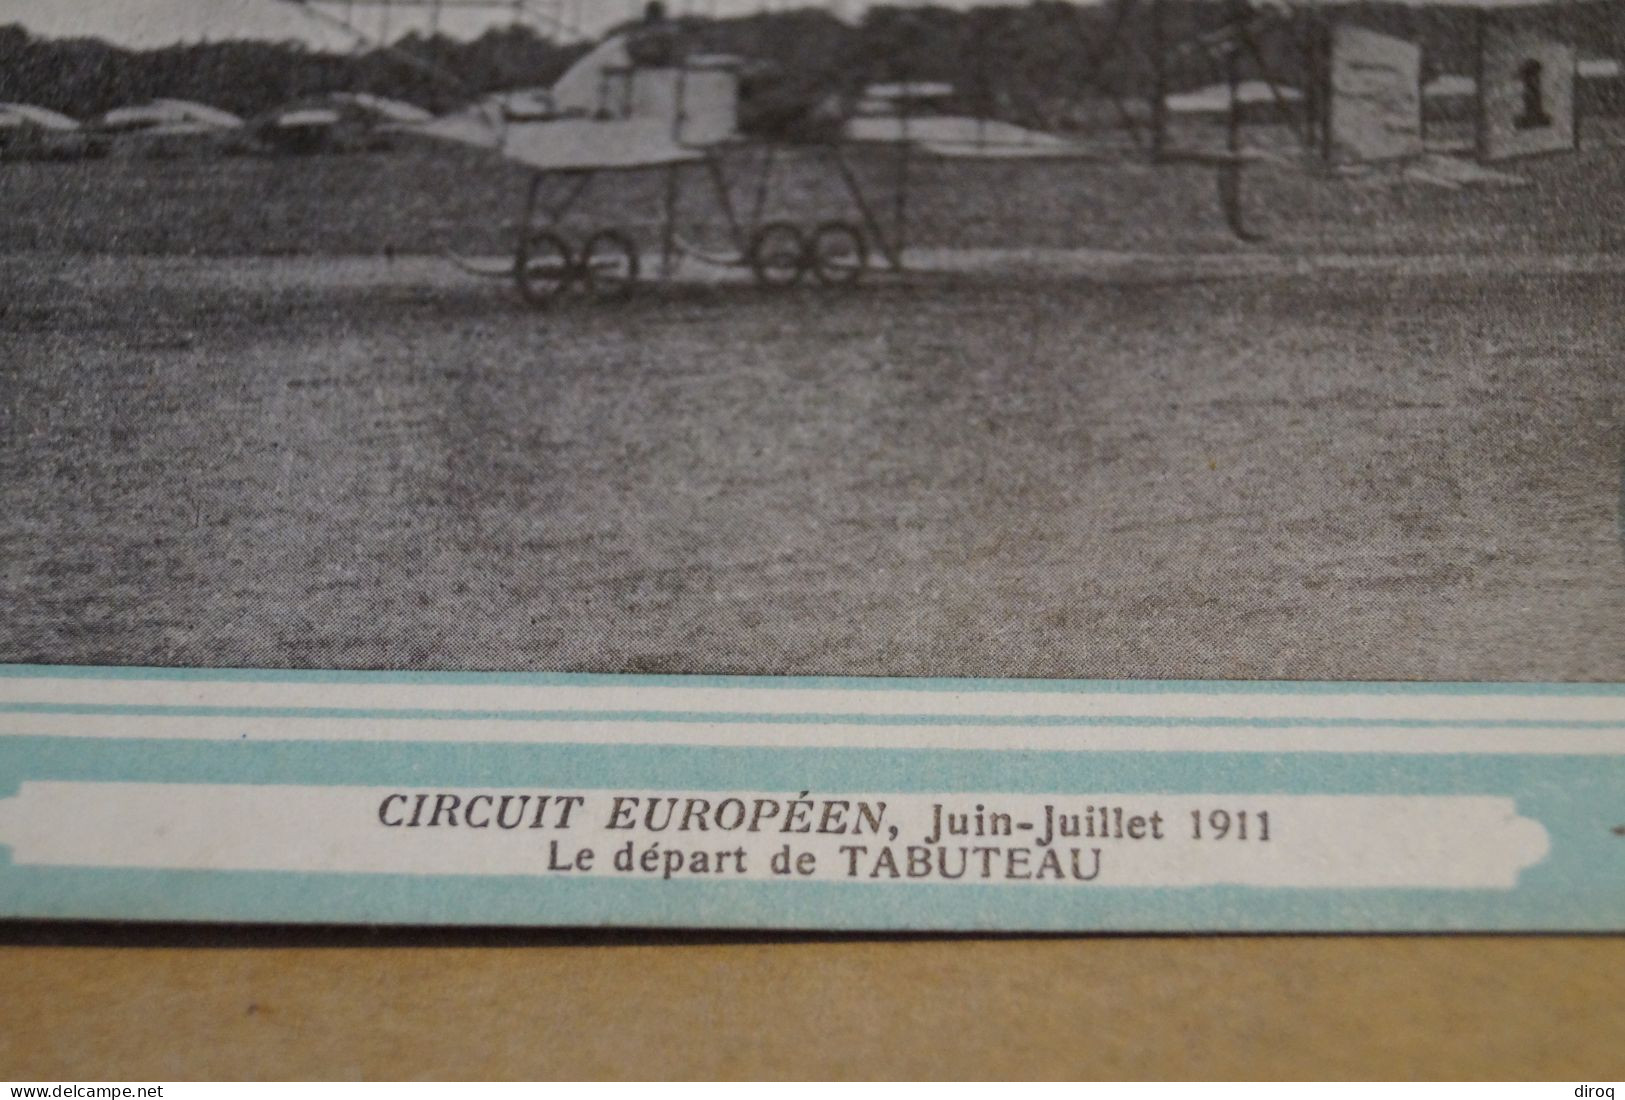 CIRCUIT EUROPEEN DE JUIN - JUILLET 1911,Biplan, Bristol,belle Carte Ancienne - Fliegertreffen